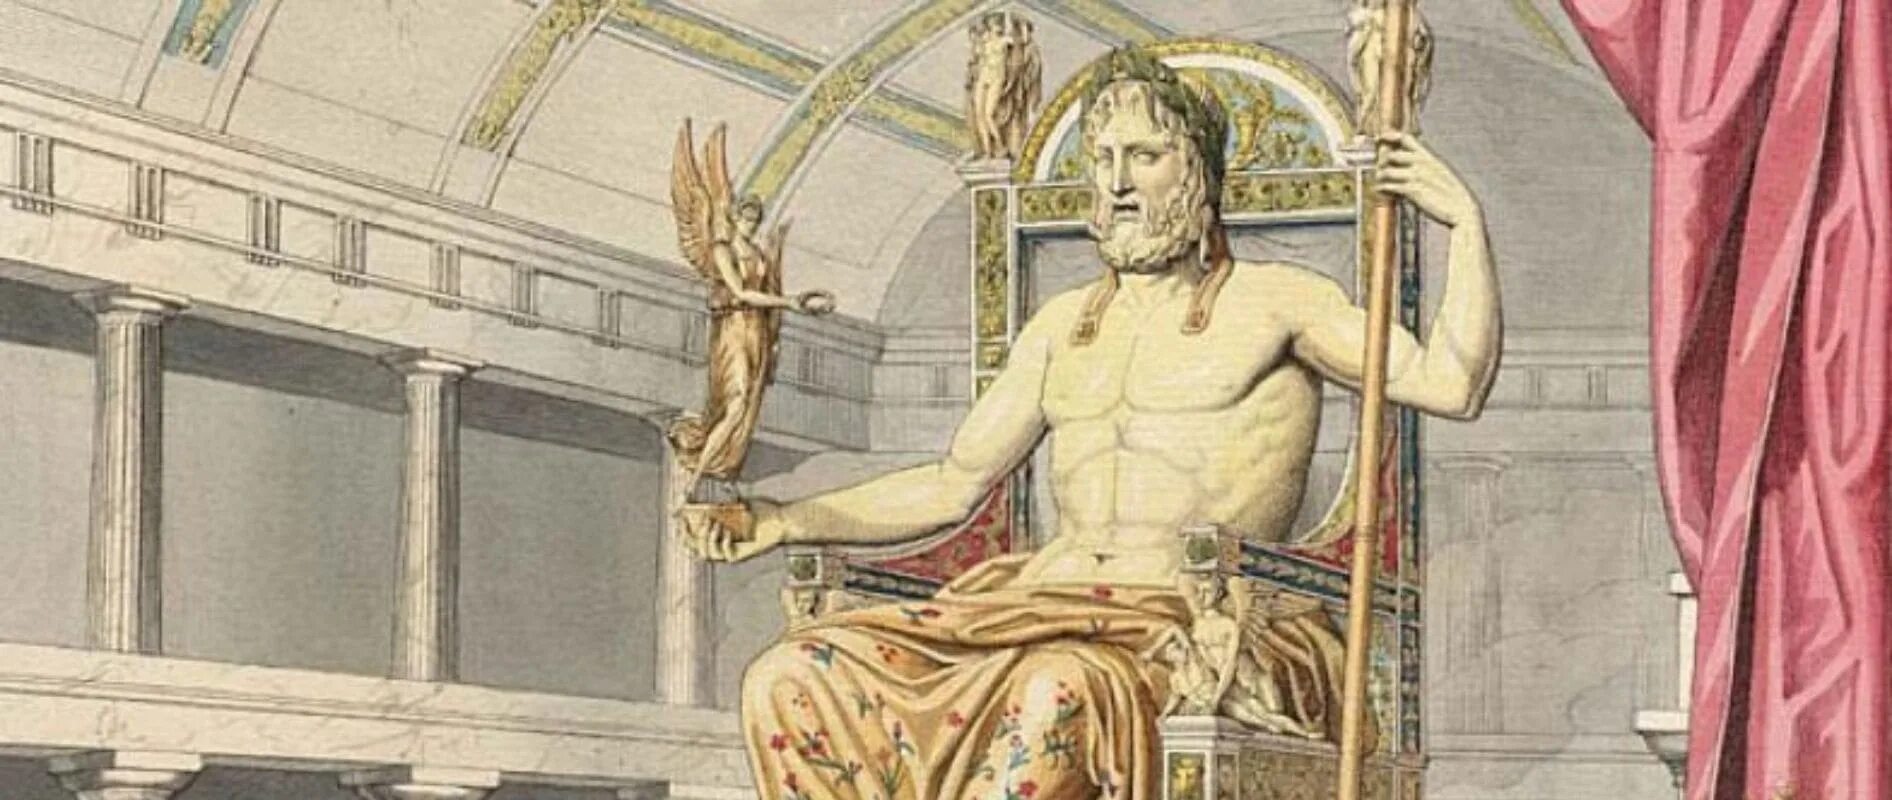 Статуя Зевса в Олимпии Греция. Статуя Зевса олимпийского Фидий. Статуя Зевса в Олимпии (Олимпия, 435 г. до н. э.),. Скульптура Фидия Зевс.